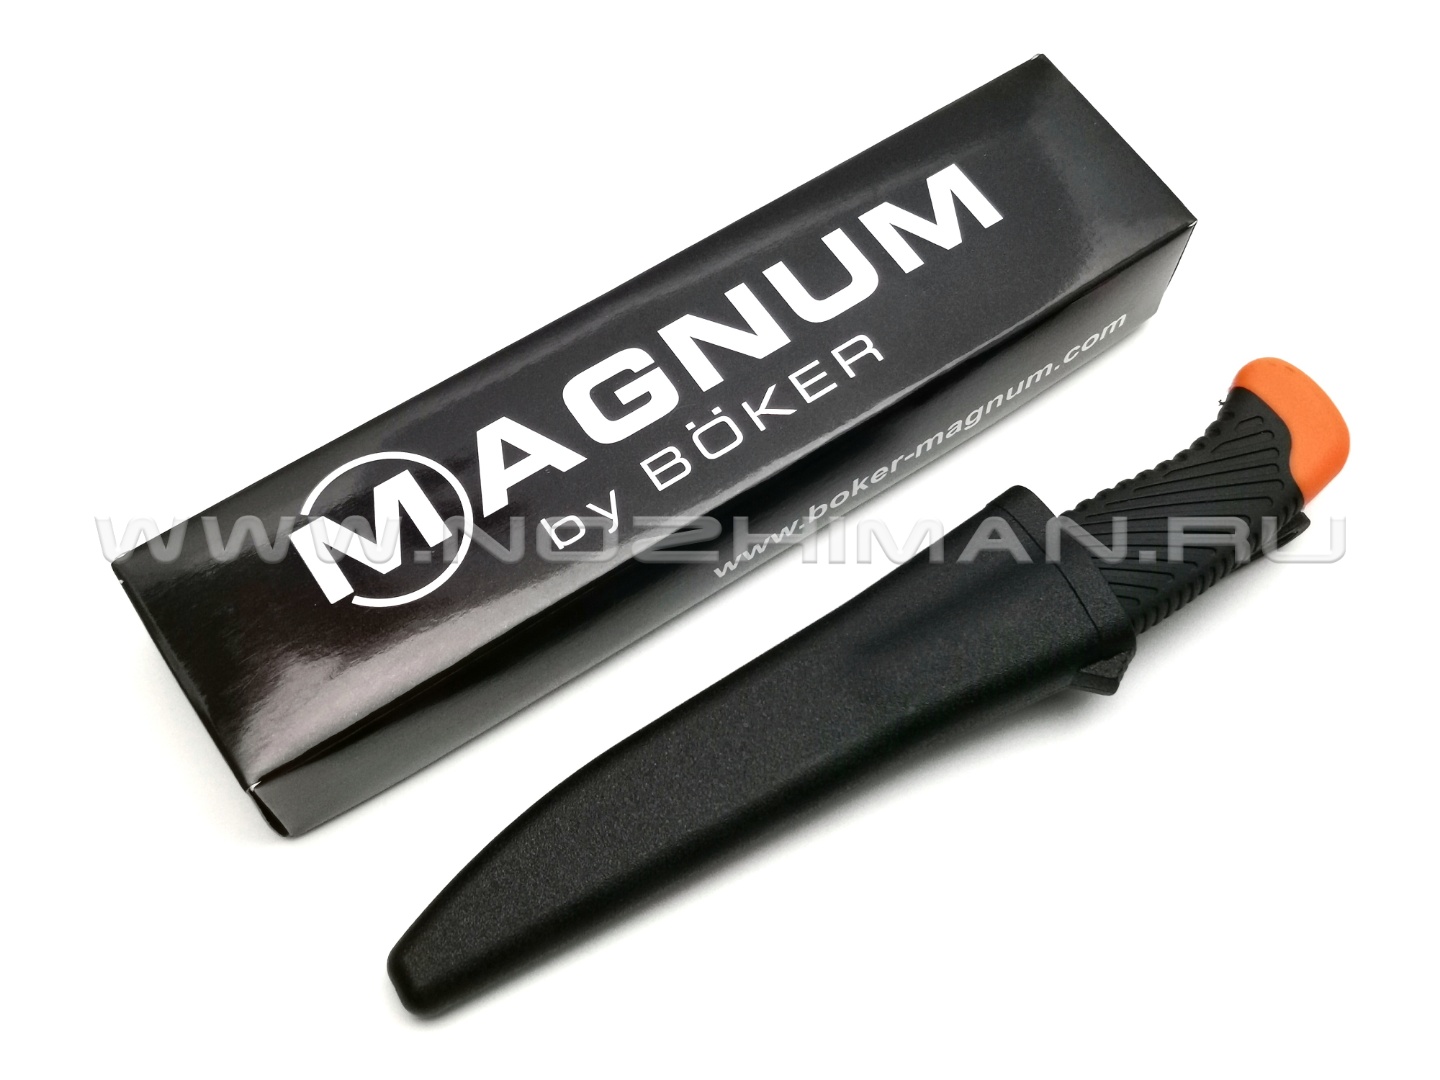 Нож Magnum Falun Orange 02RY100 сталь 420, рукоять пластик, резина